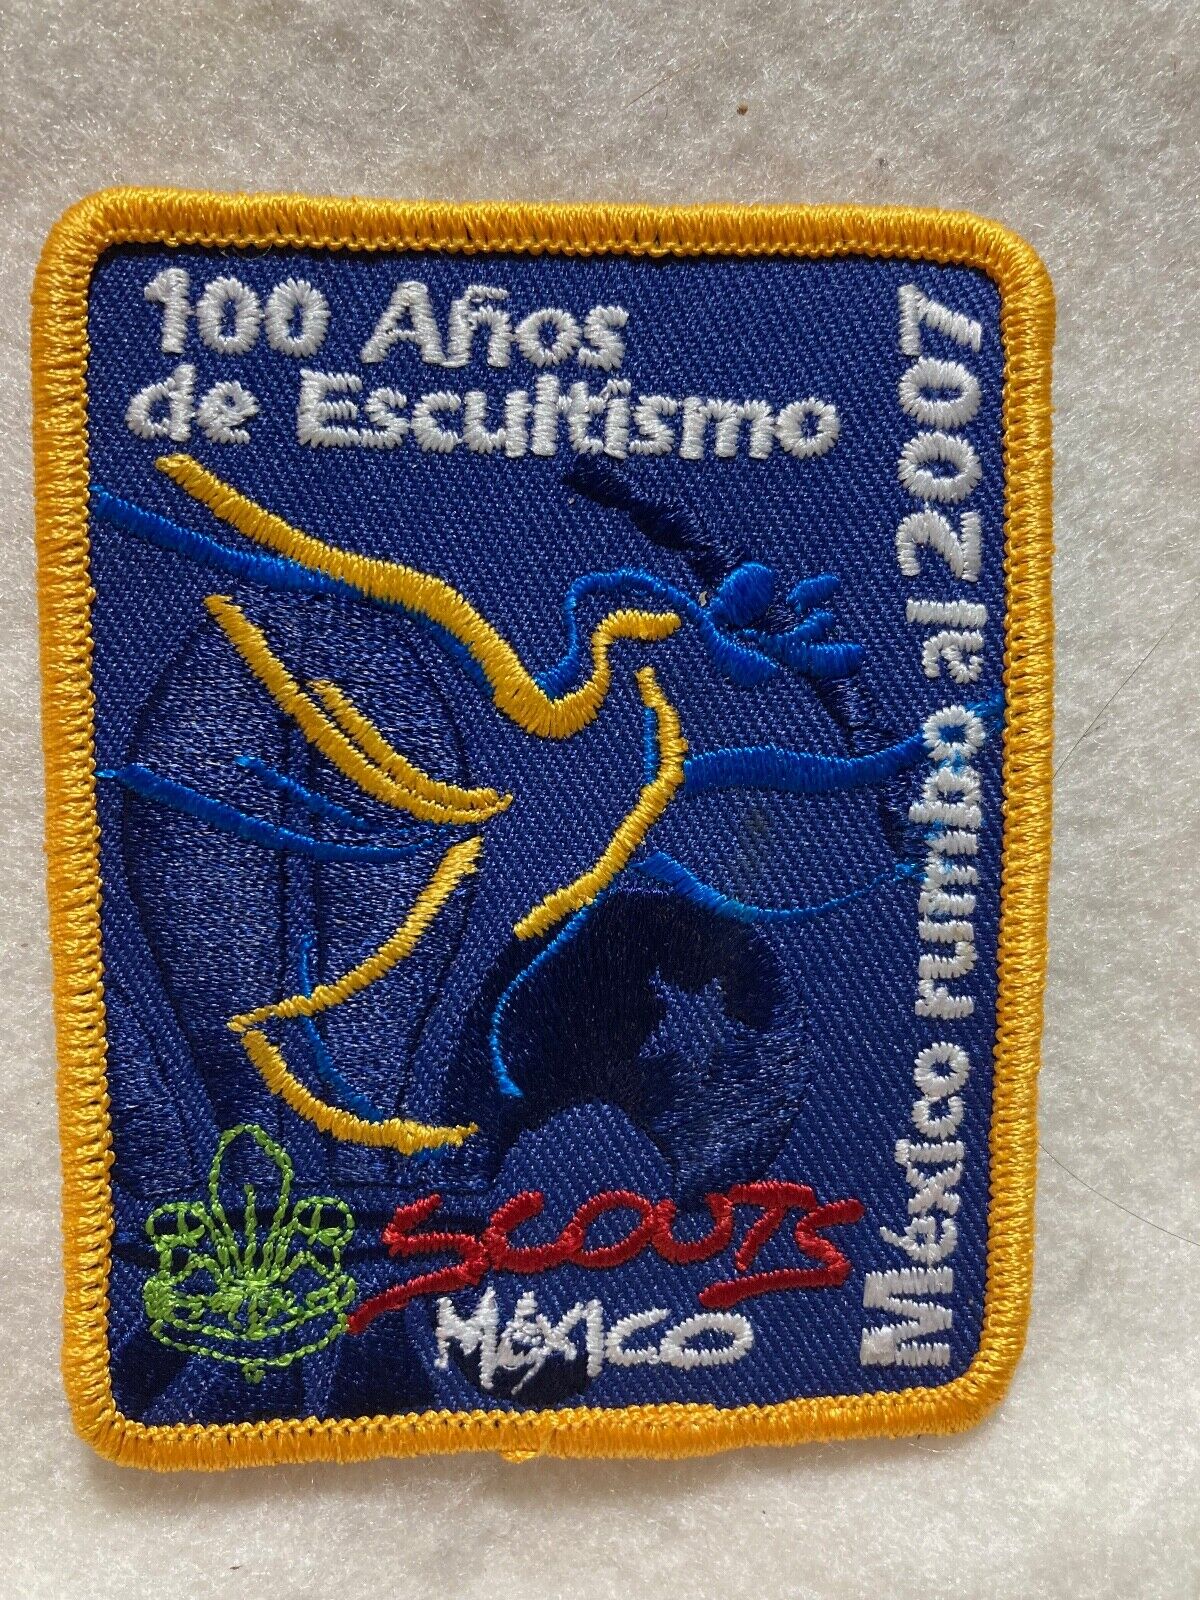 (mr16)  100 Anos de Escultismo - Scouts Mexico patch - 2007